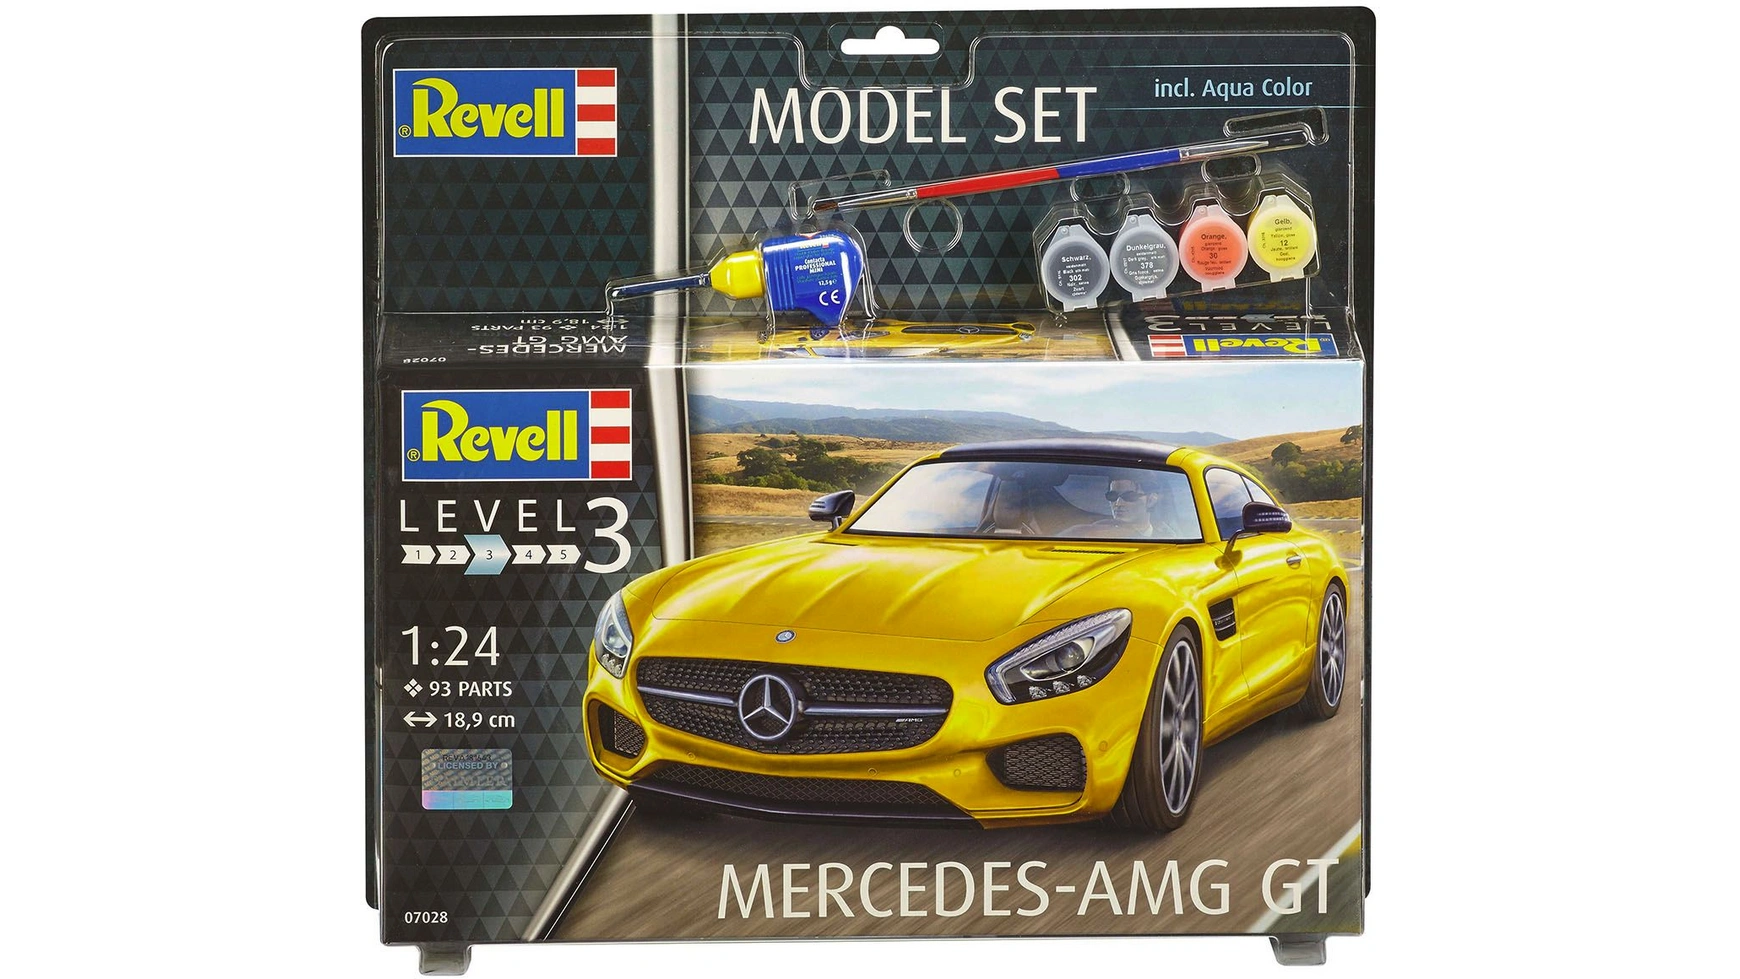 Revell Набор моделей Mercedes-AMG GT 1669054300 новый электрический переключатель окна для mercedes benz w176 a160 a180 a200 a220 a250 a45 amg